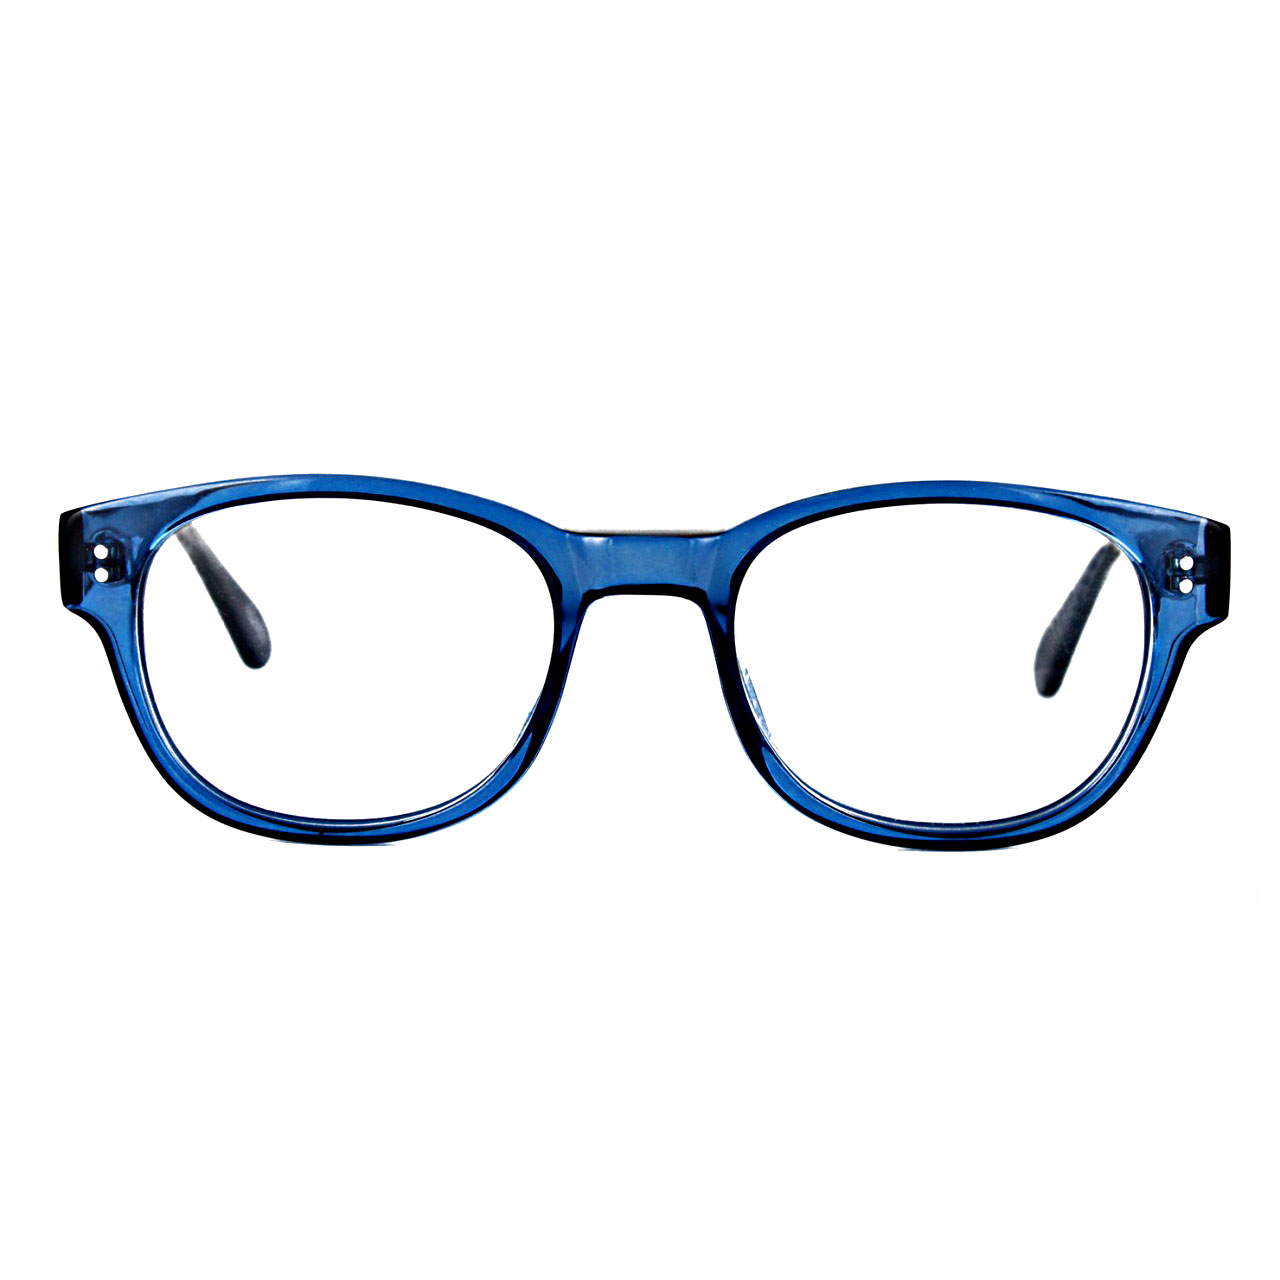 GEEK EYEWEAR ® RX Eyeglasses style 124 | Hipster Collection ...